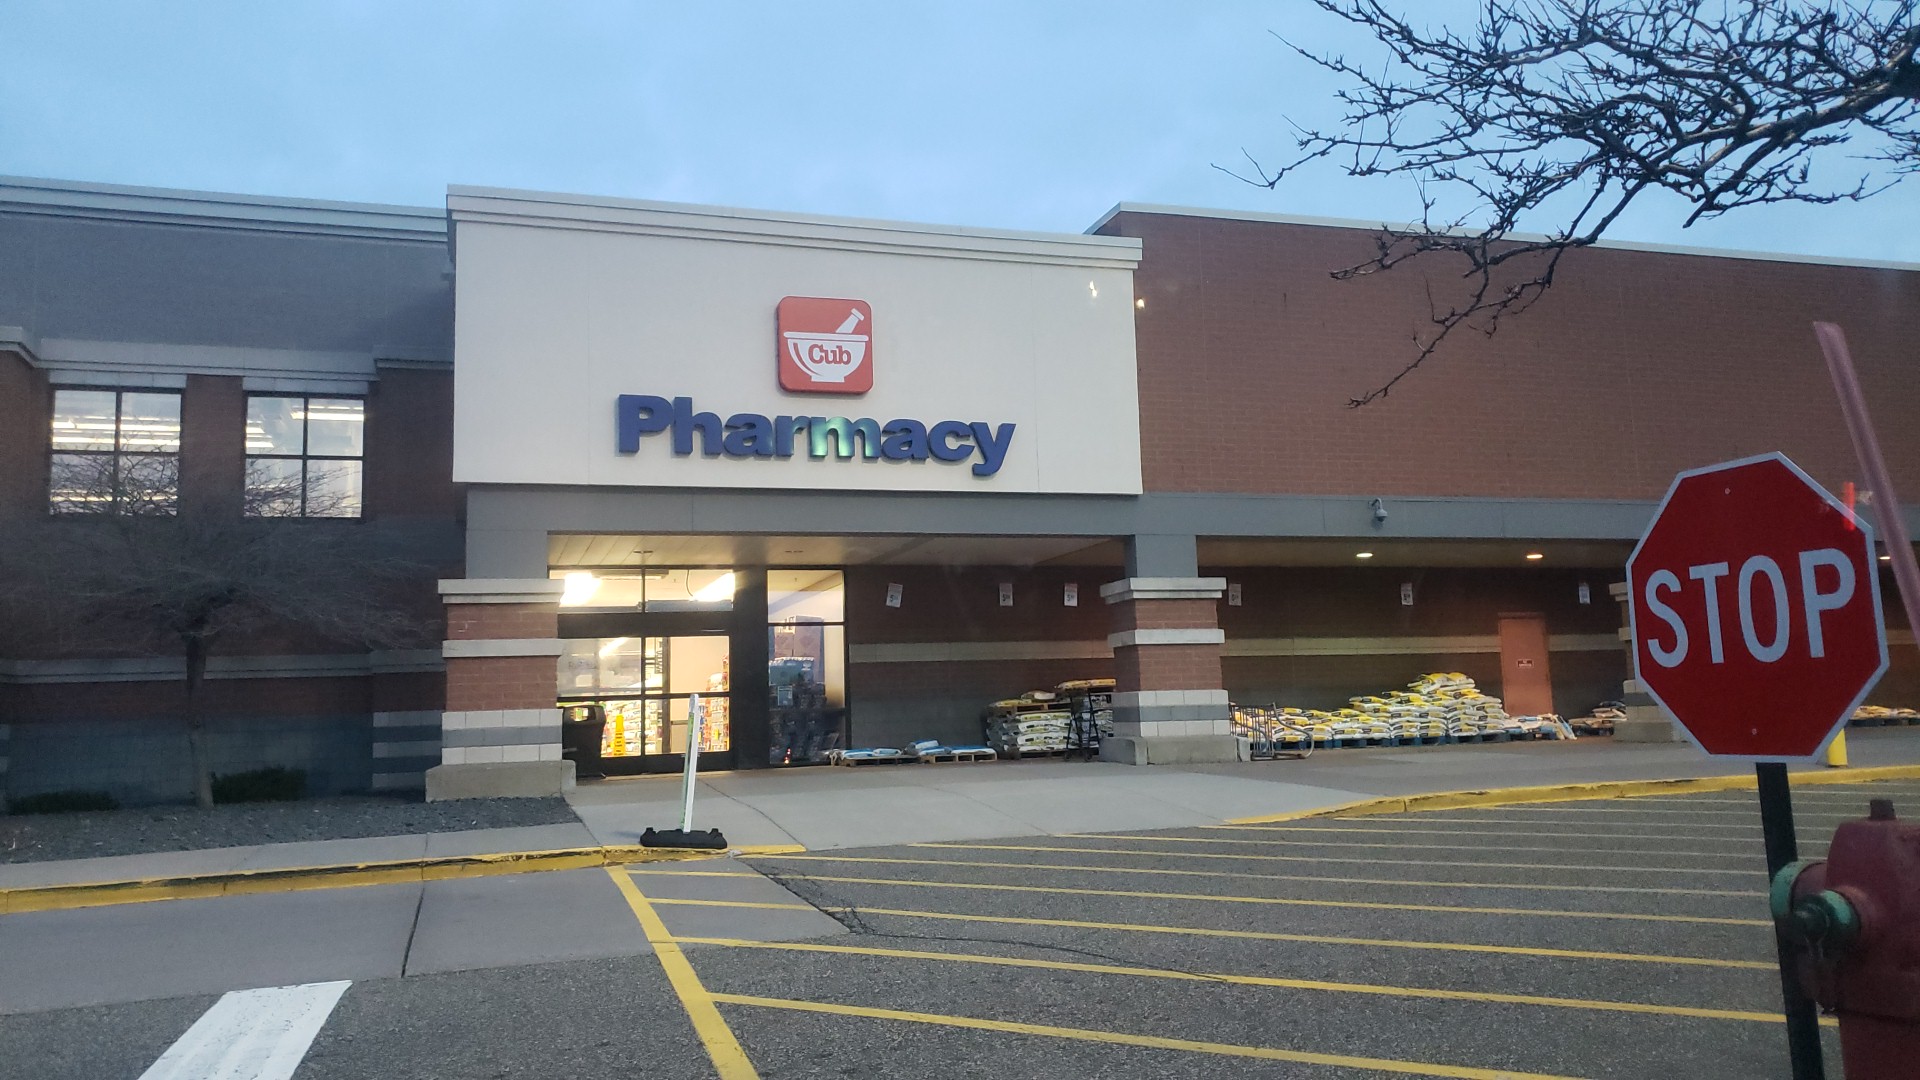 Cub Pharmacy